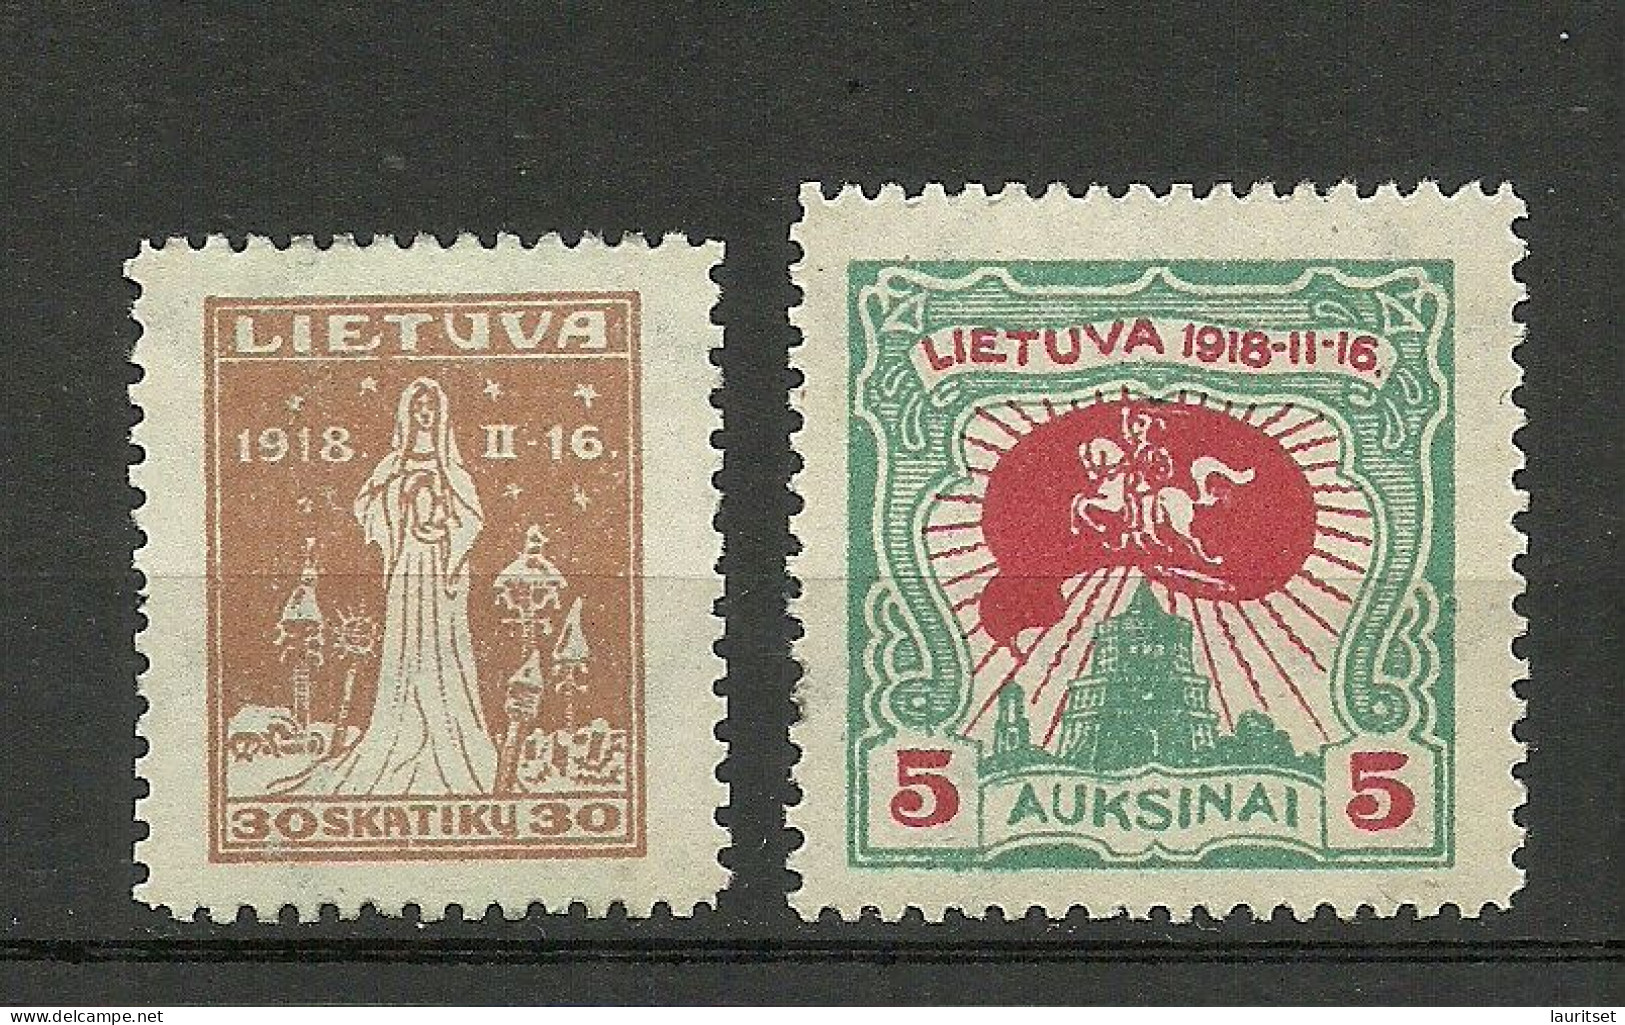 LITAUEN Lithuania 1920 Michel 68 & 75 * - Litauen